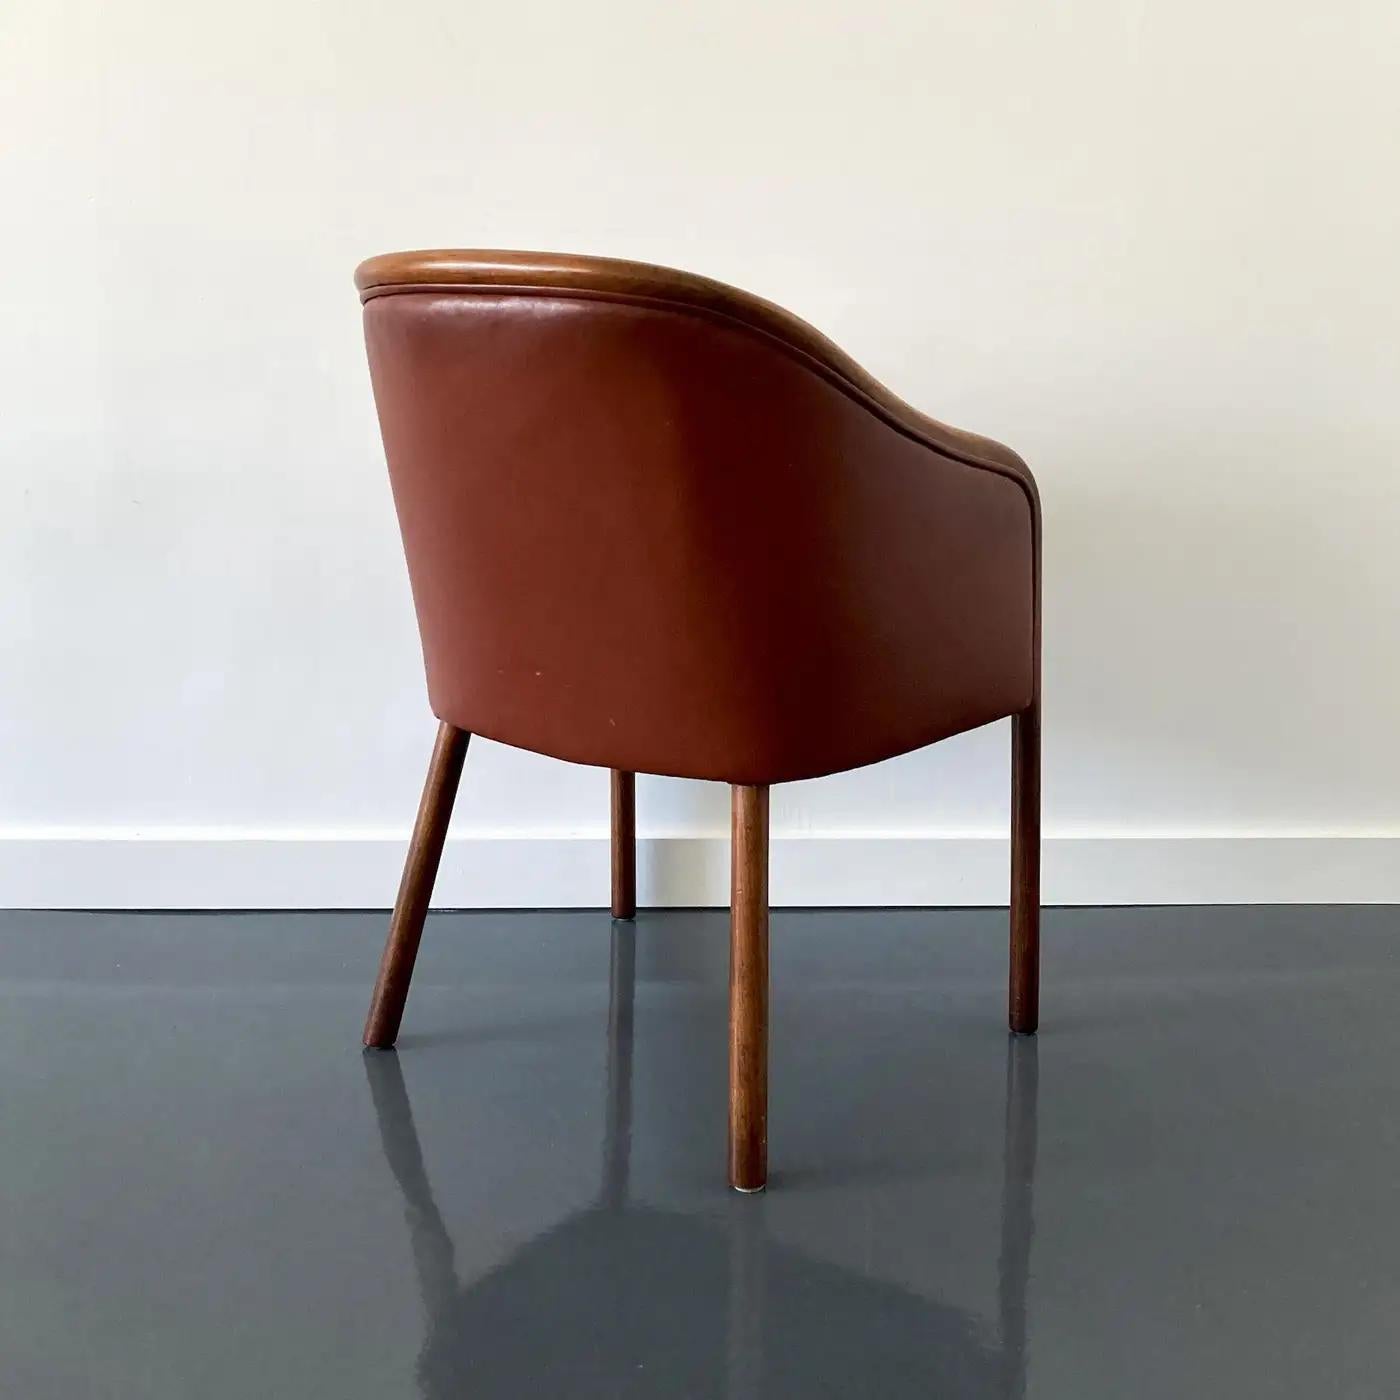 Ward Bennett Brickel Associates Ash & Burgundy Leather Chair, 1970s For Sale 1